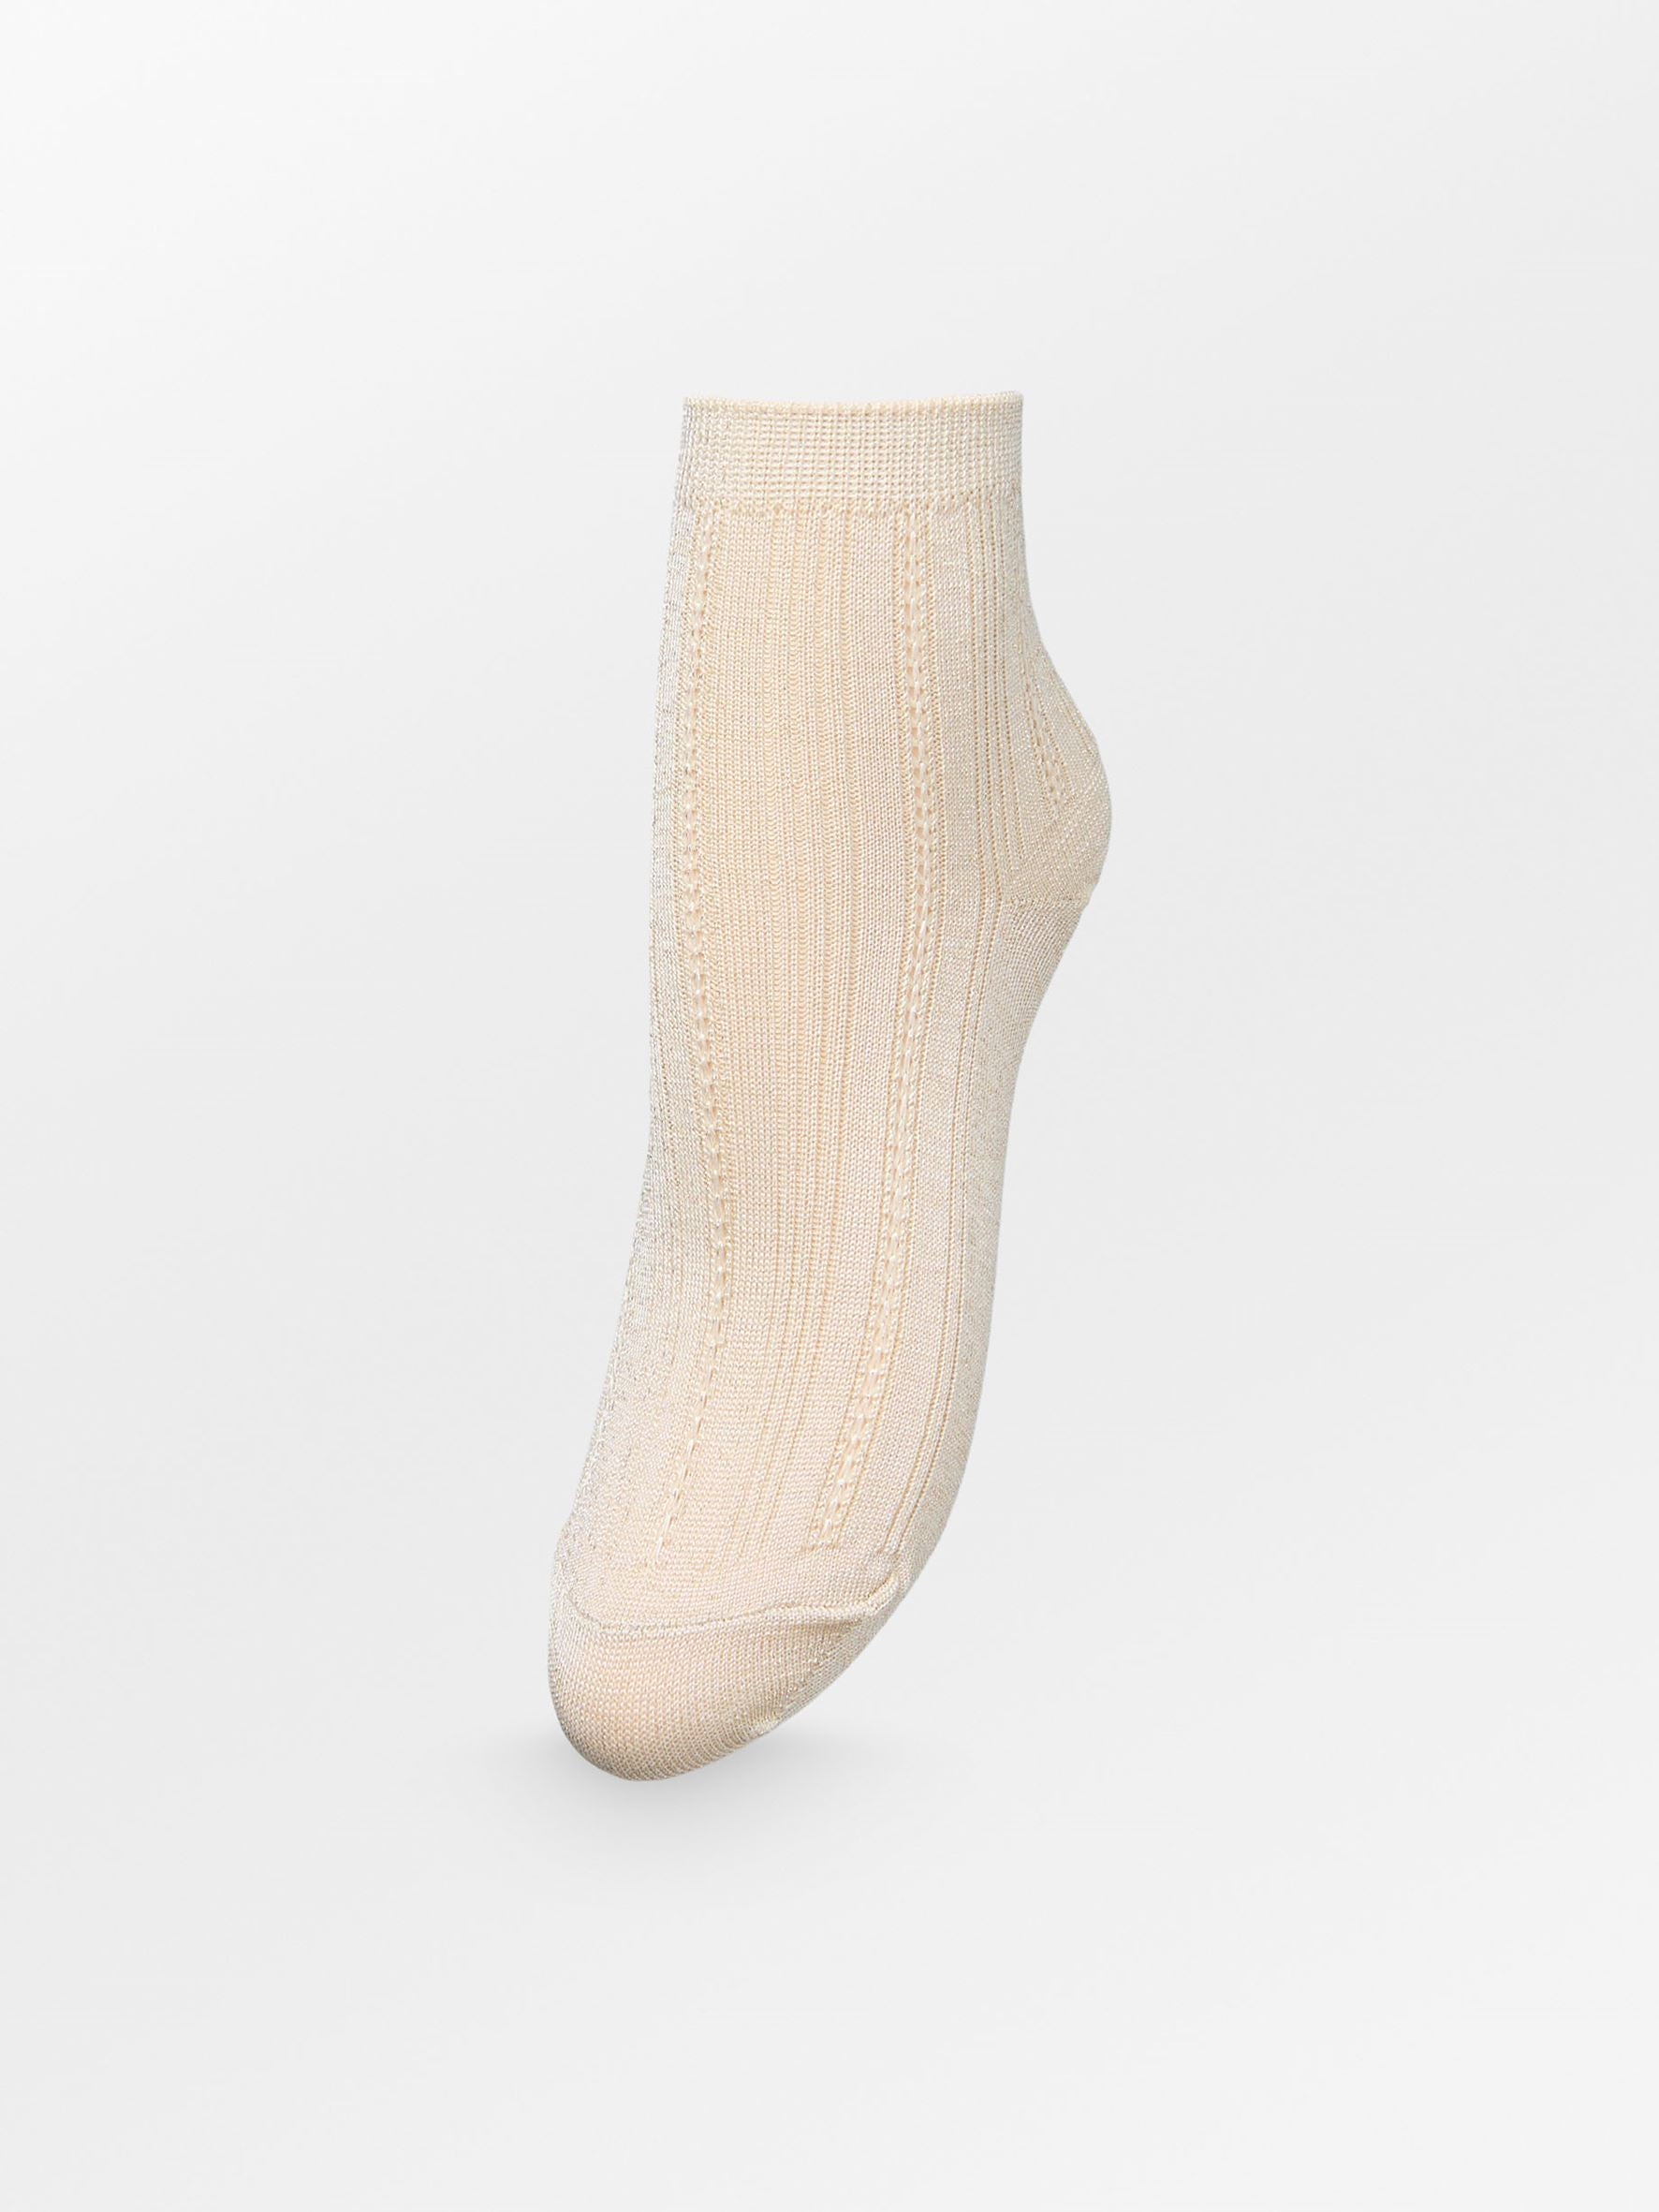 Becksöndergaard, Glitter Dollie Sock - Sand Dollar, socks, socks